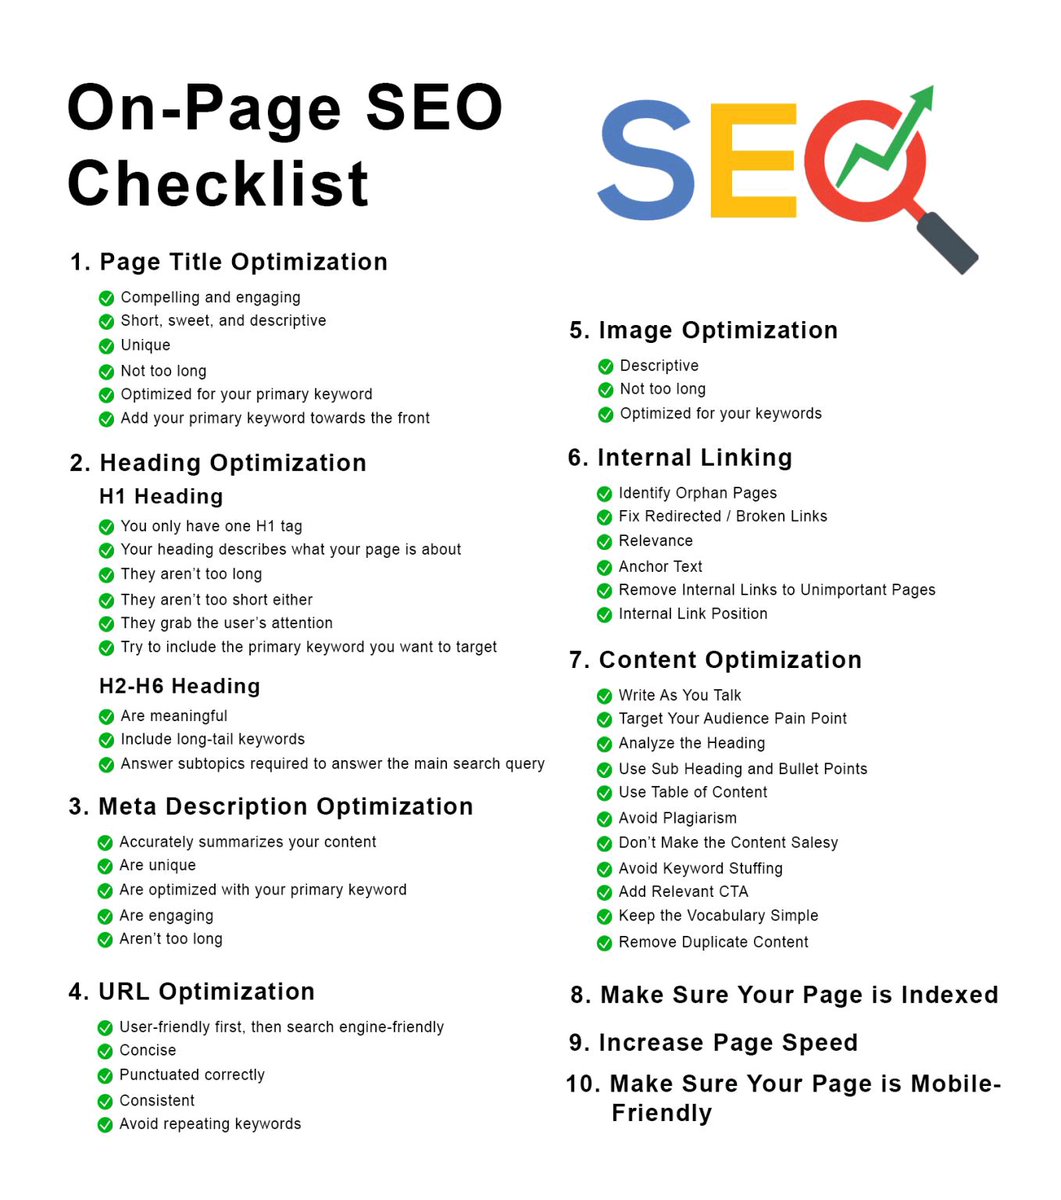 On page SEO checklist😍
#SEO #MarketingStrategy #seotips